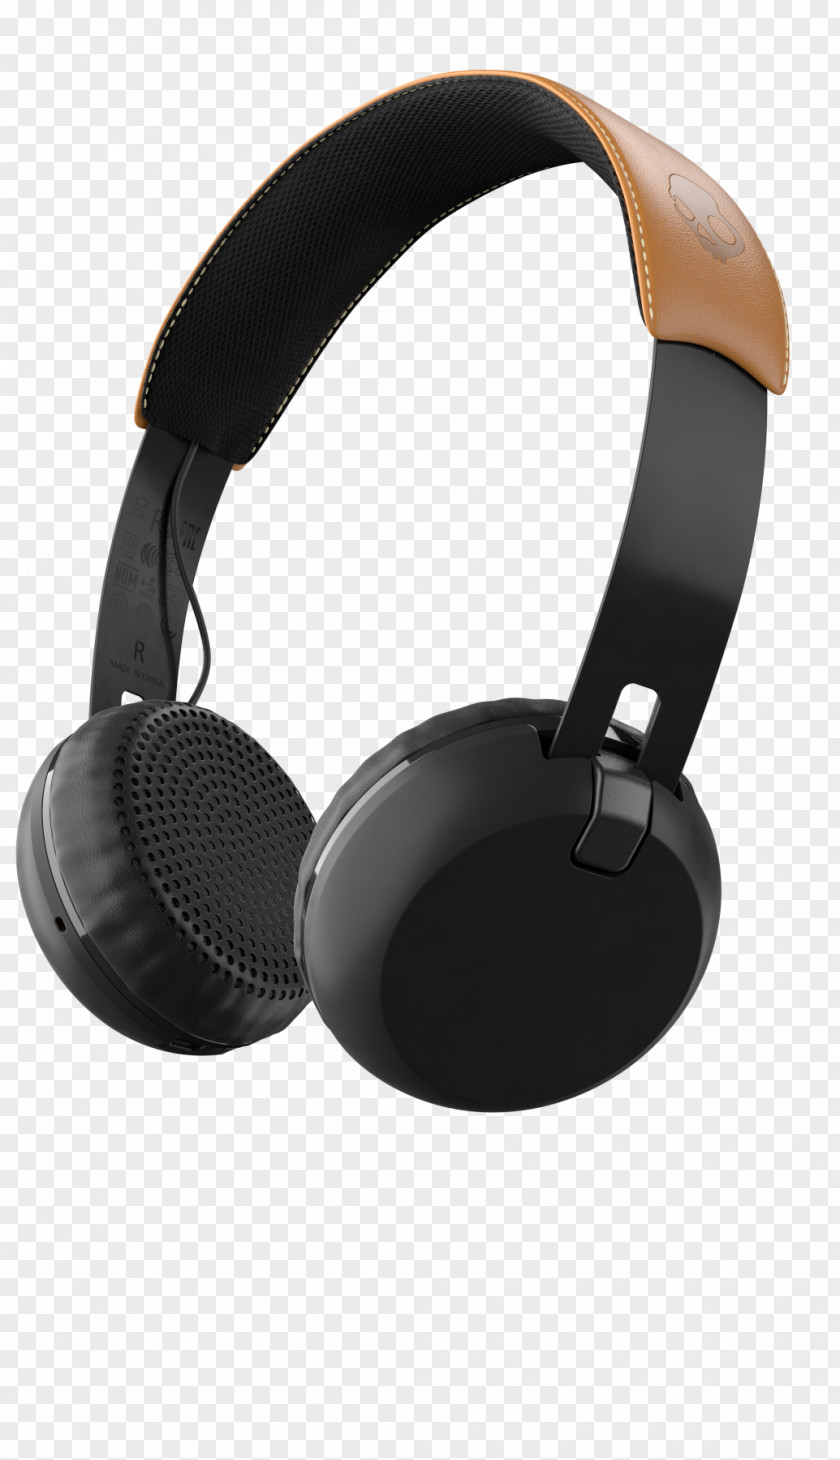 Headphones Skullcandy Grind Xbox 360 Wireless Headset PNG